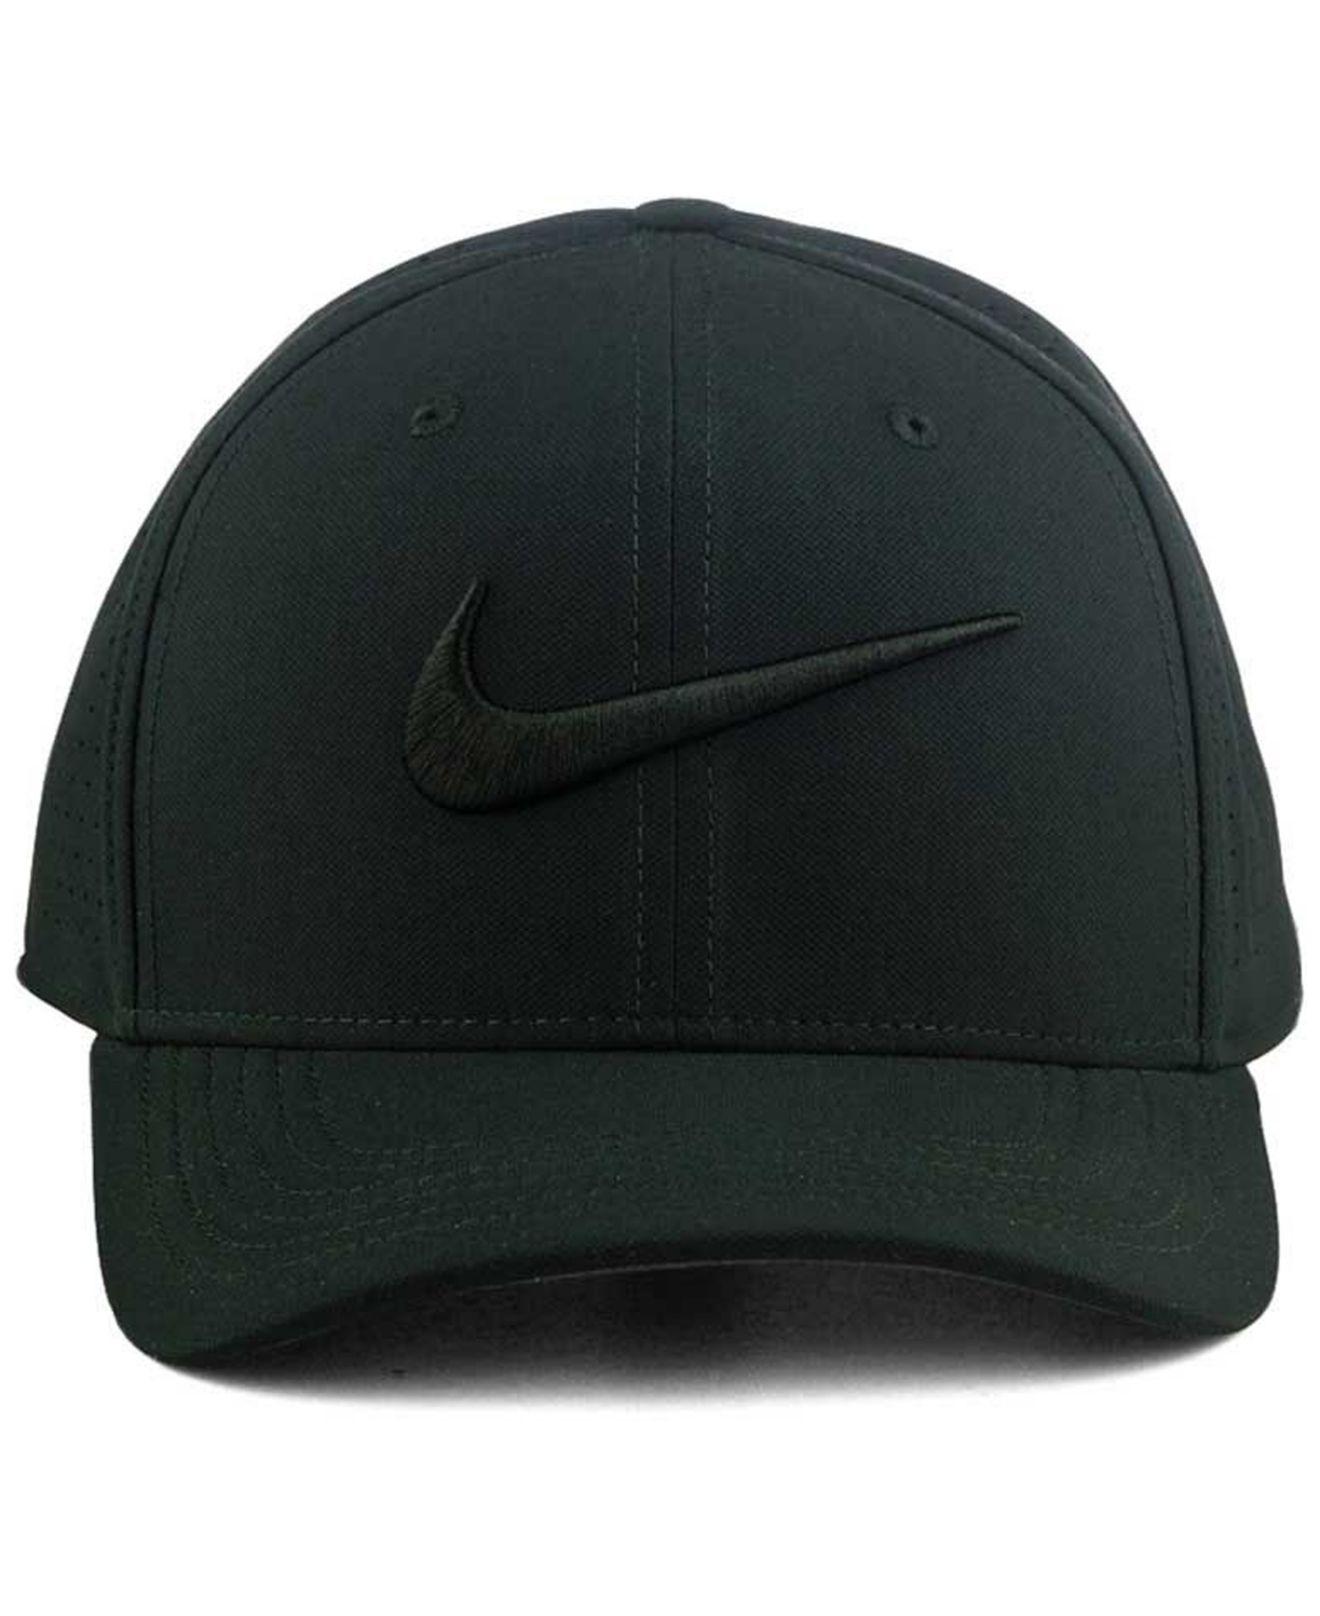 Nike Synthetic Vapor Flex Ii Cap in Black/Black (Black) for Men - Lyst